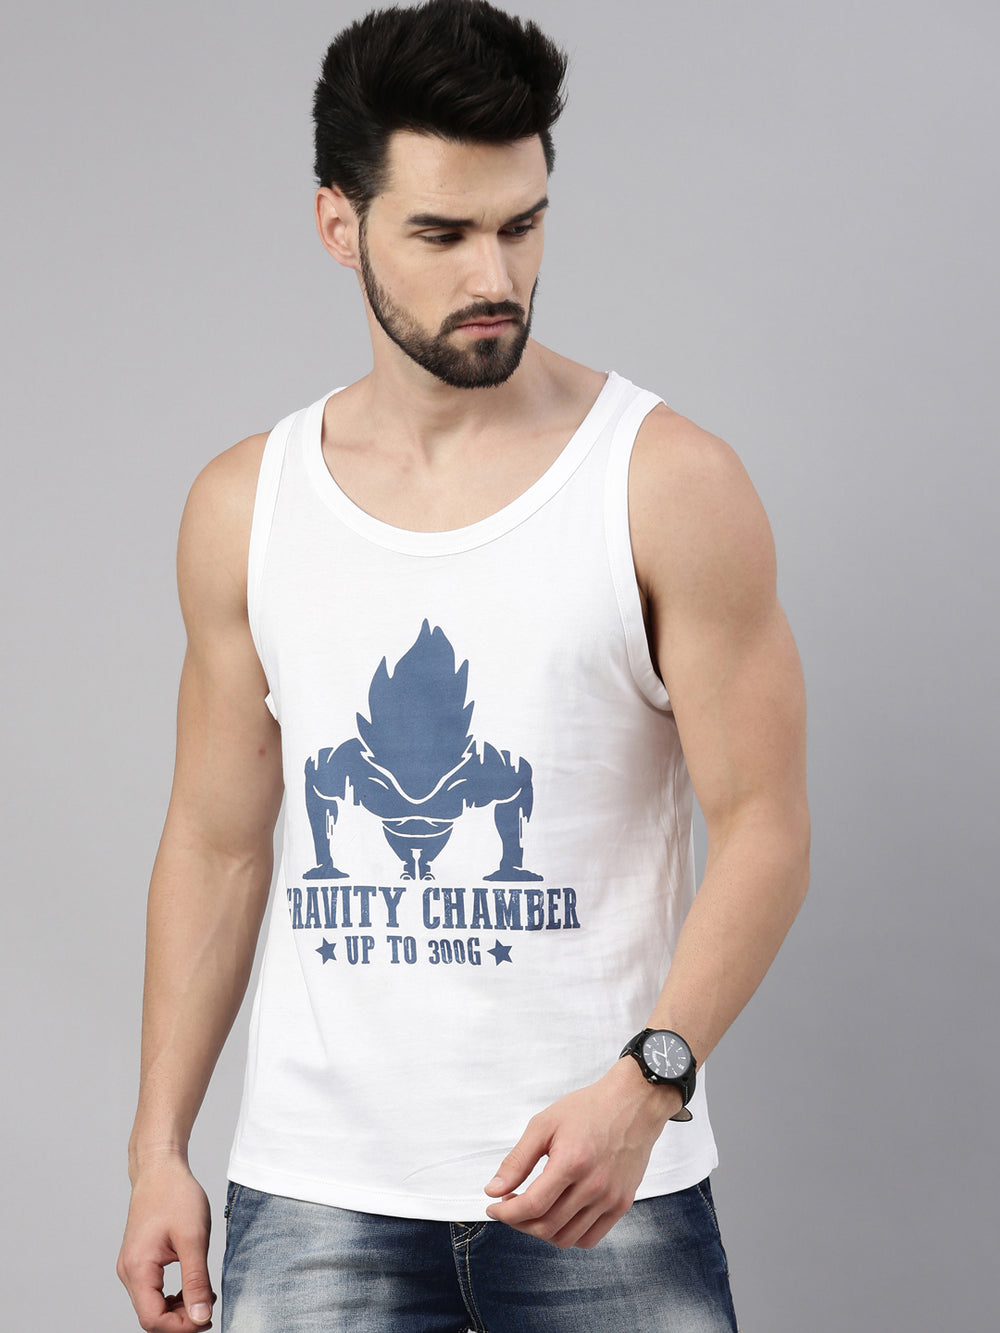 Gravity Chamber - Dragon Ball Z Anime Sleeveless T-Shirt Vest Bushirt   